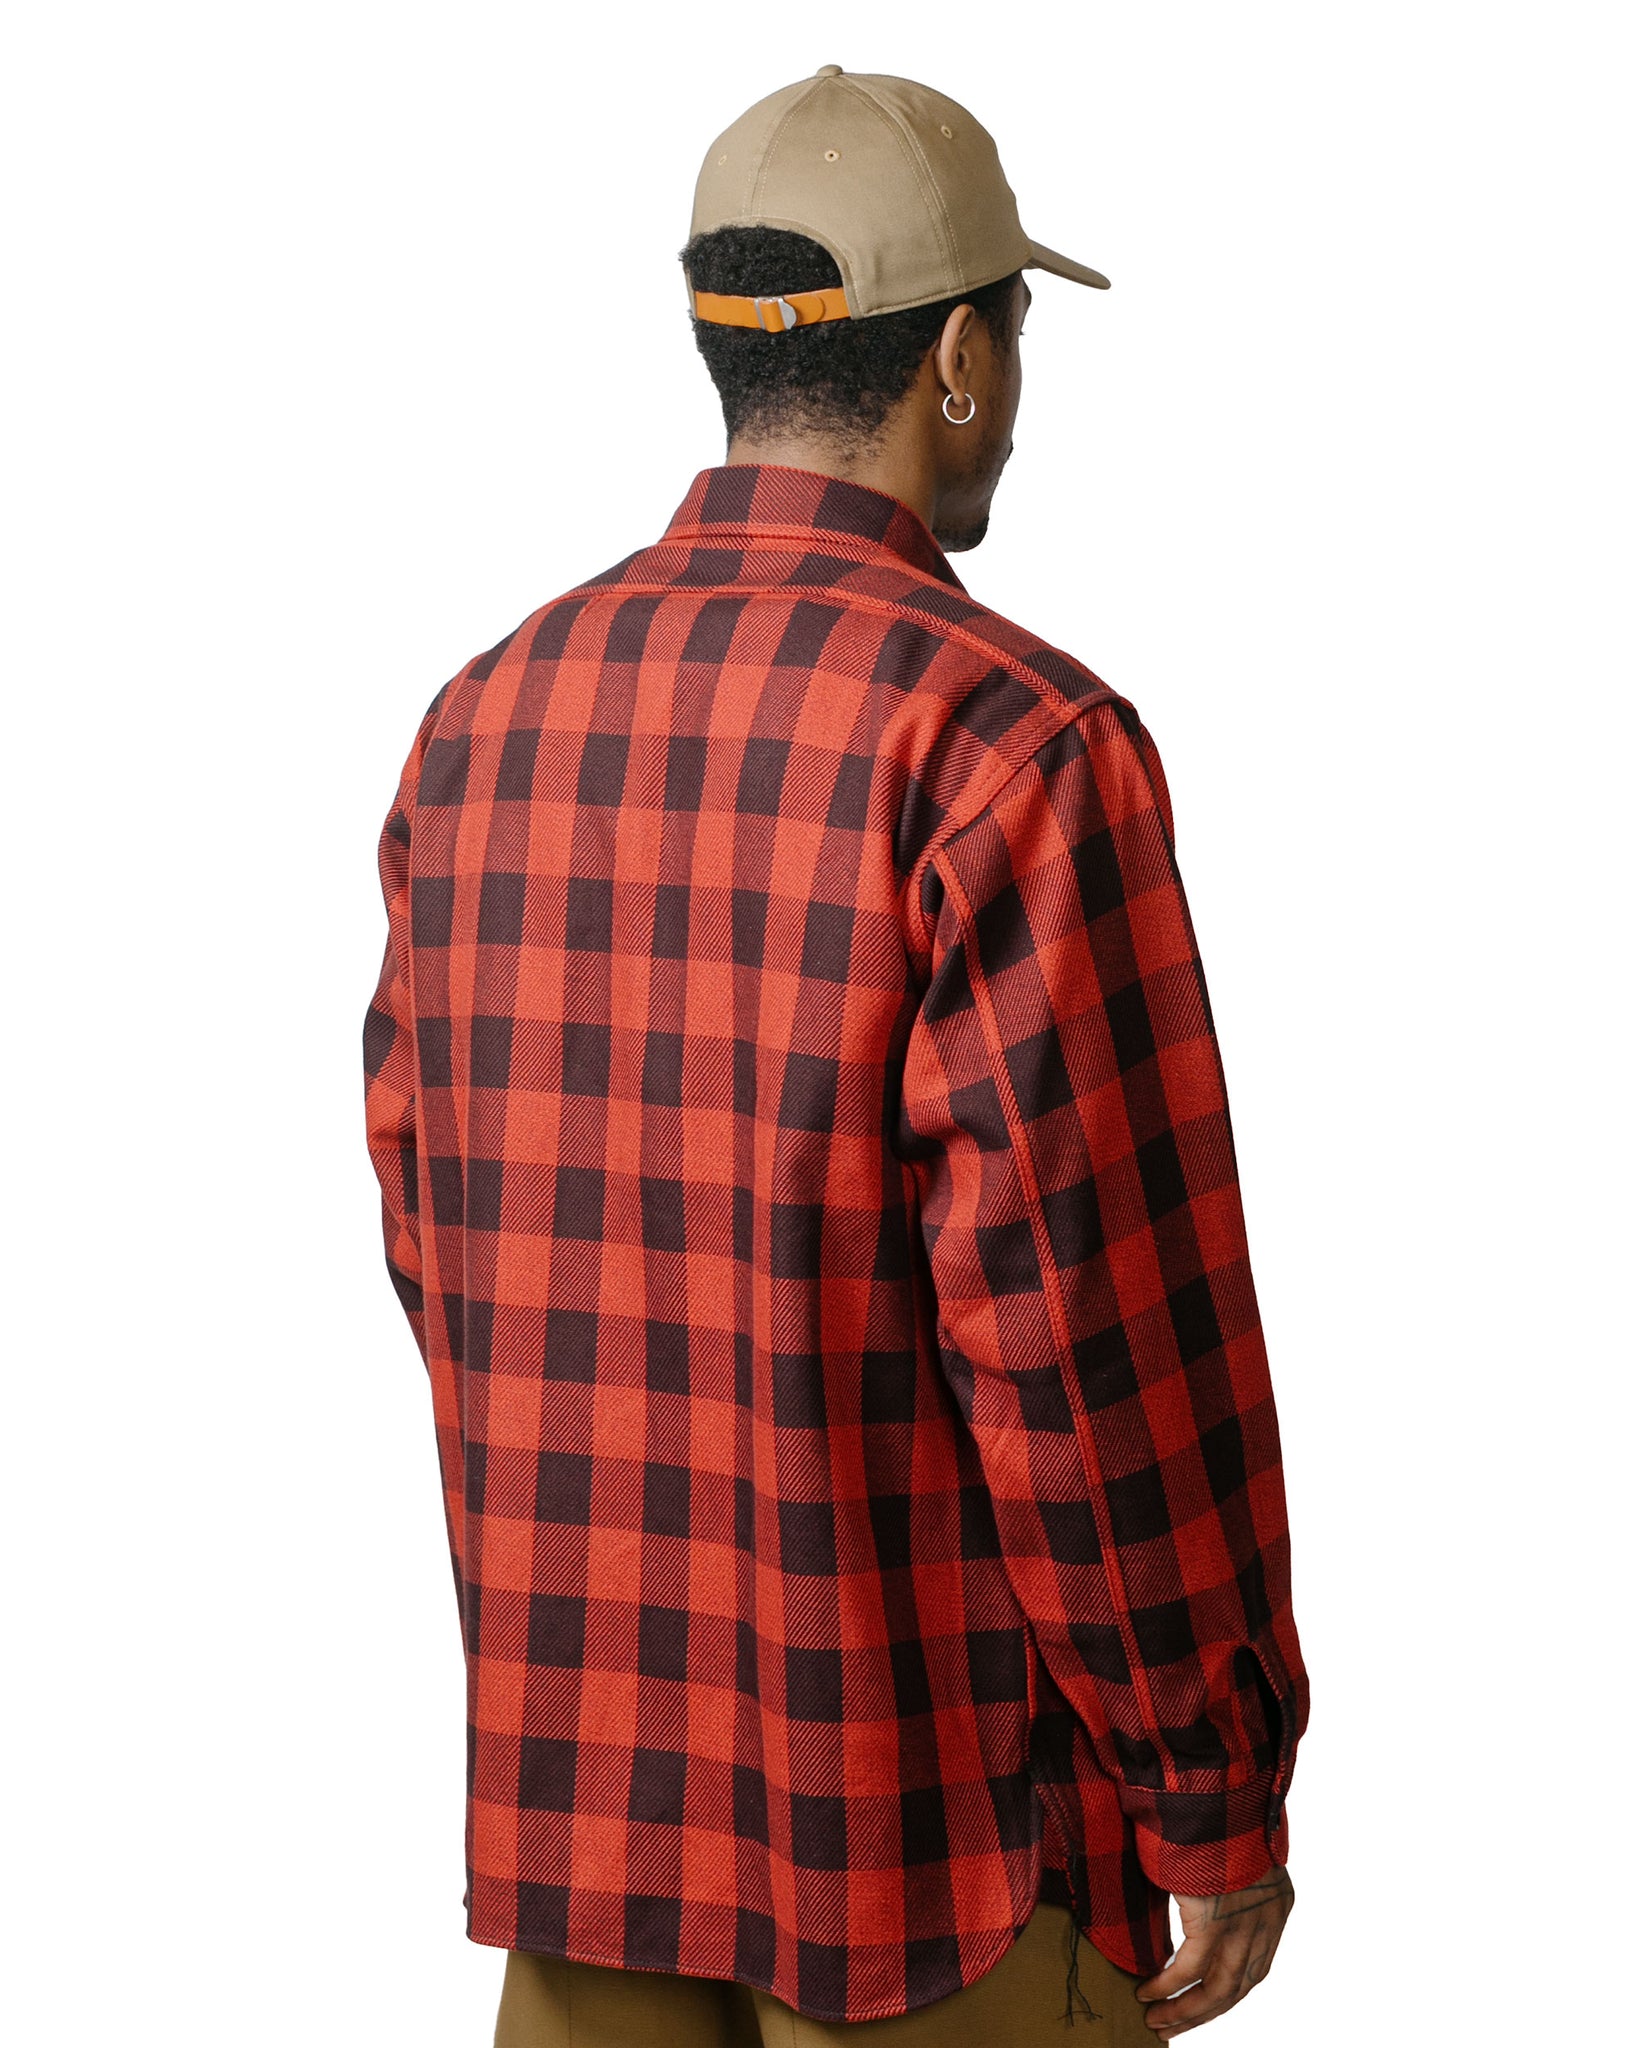 The Real McCoy's MS23104 8HU Twisted-Yarn Buffalo Check Flannel Shirt Red/Black model back